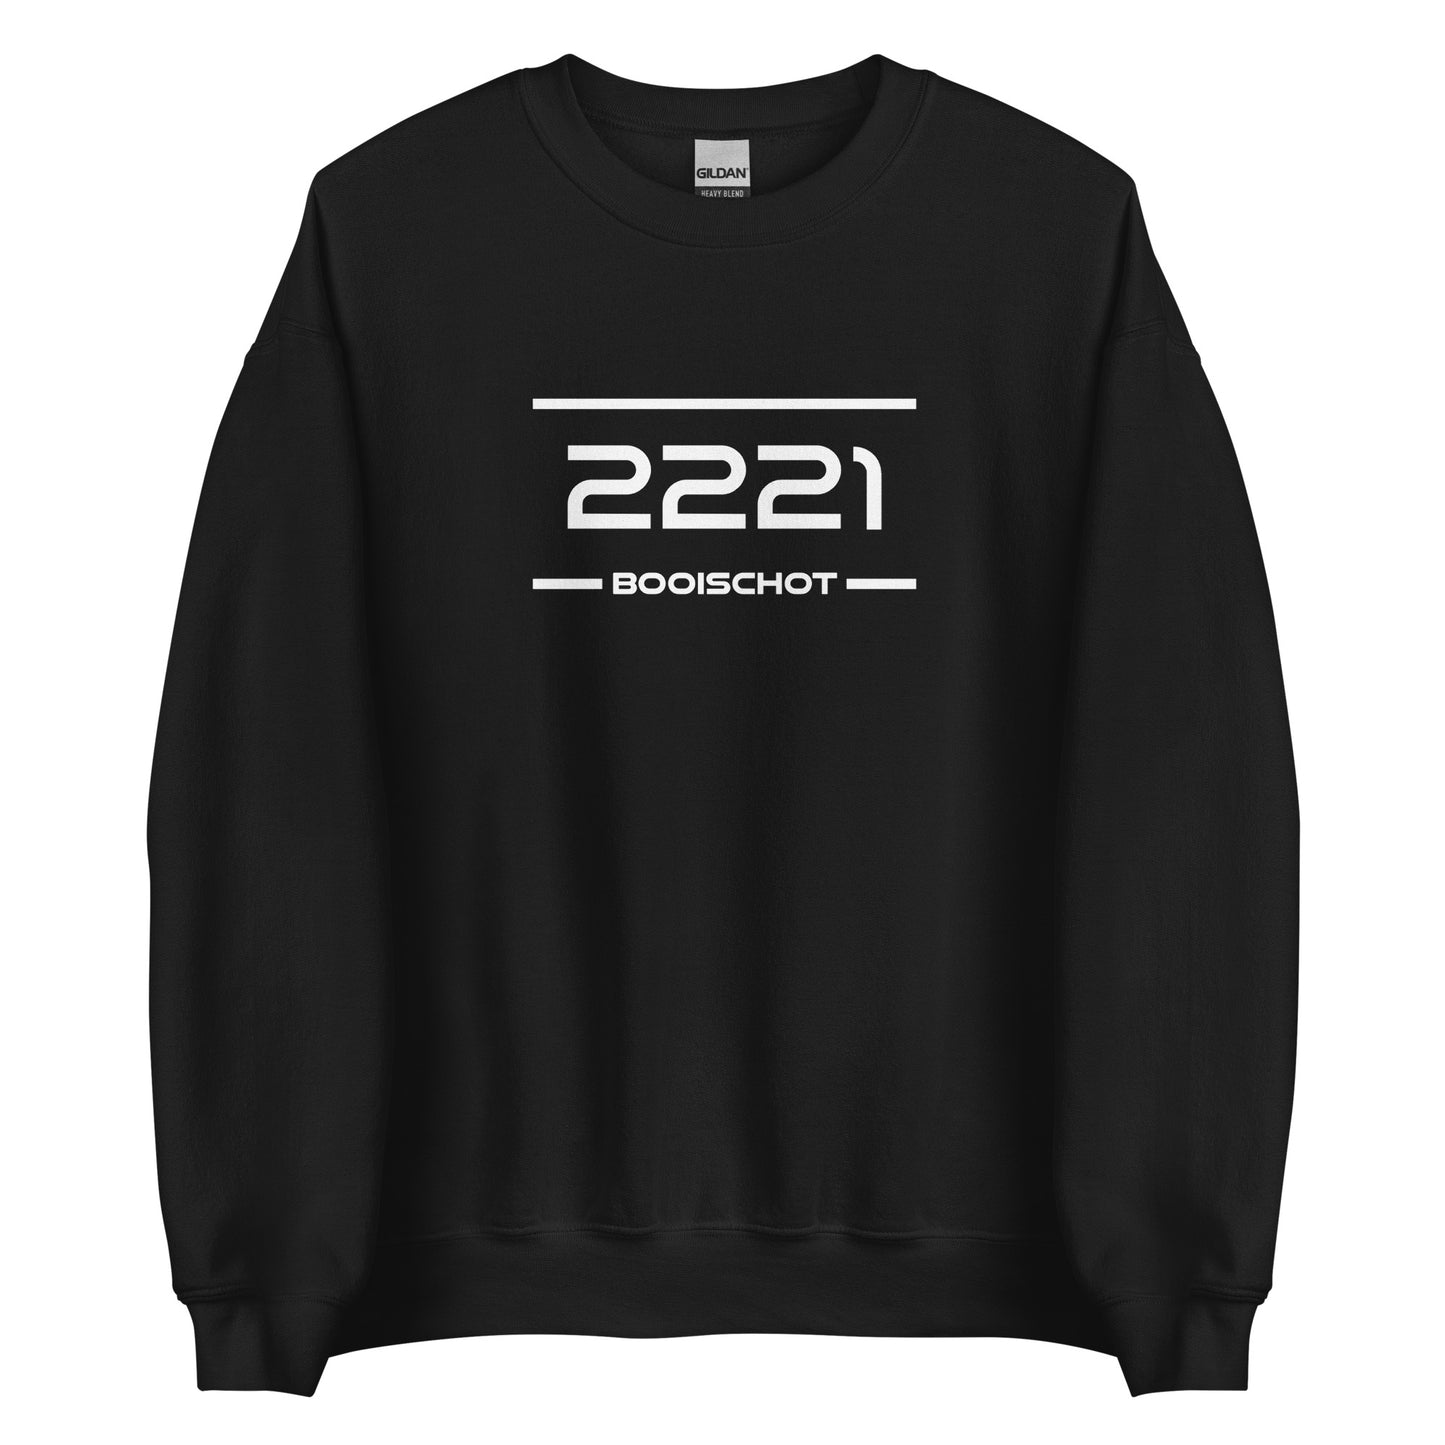 Sweater - 2221 - Booischot (M/V)